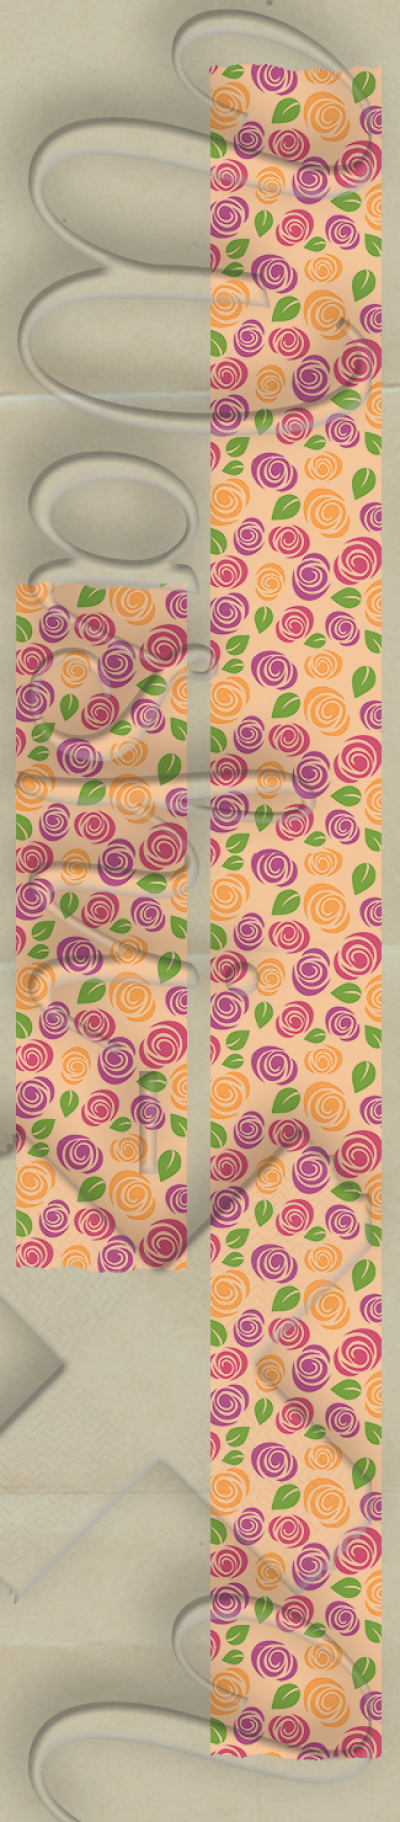 Roses patterned washi tape